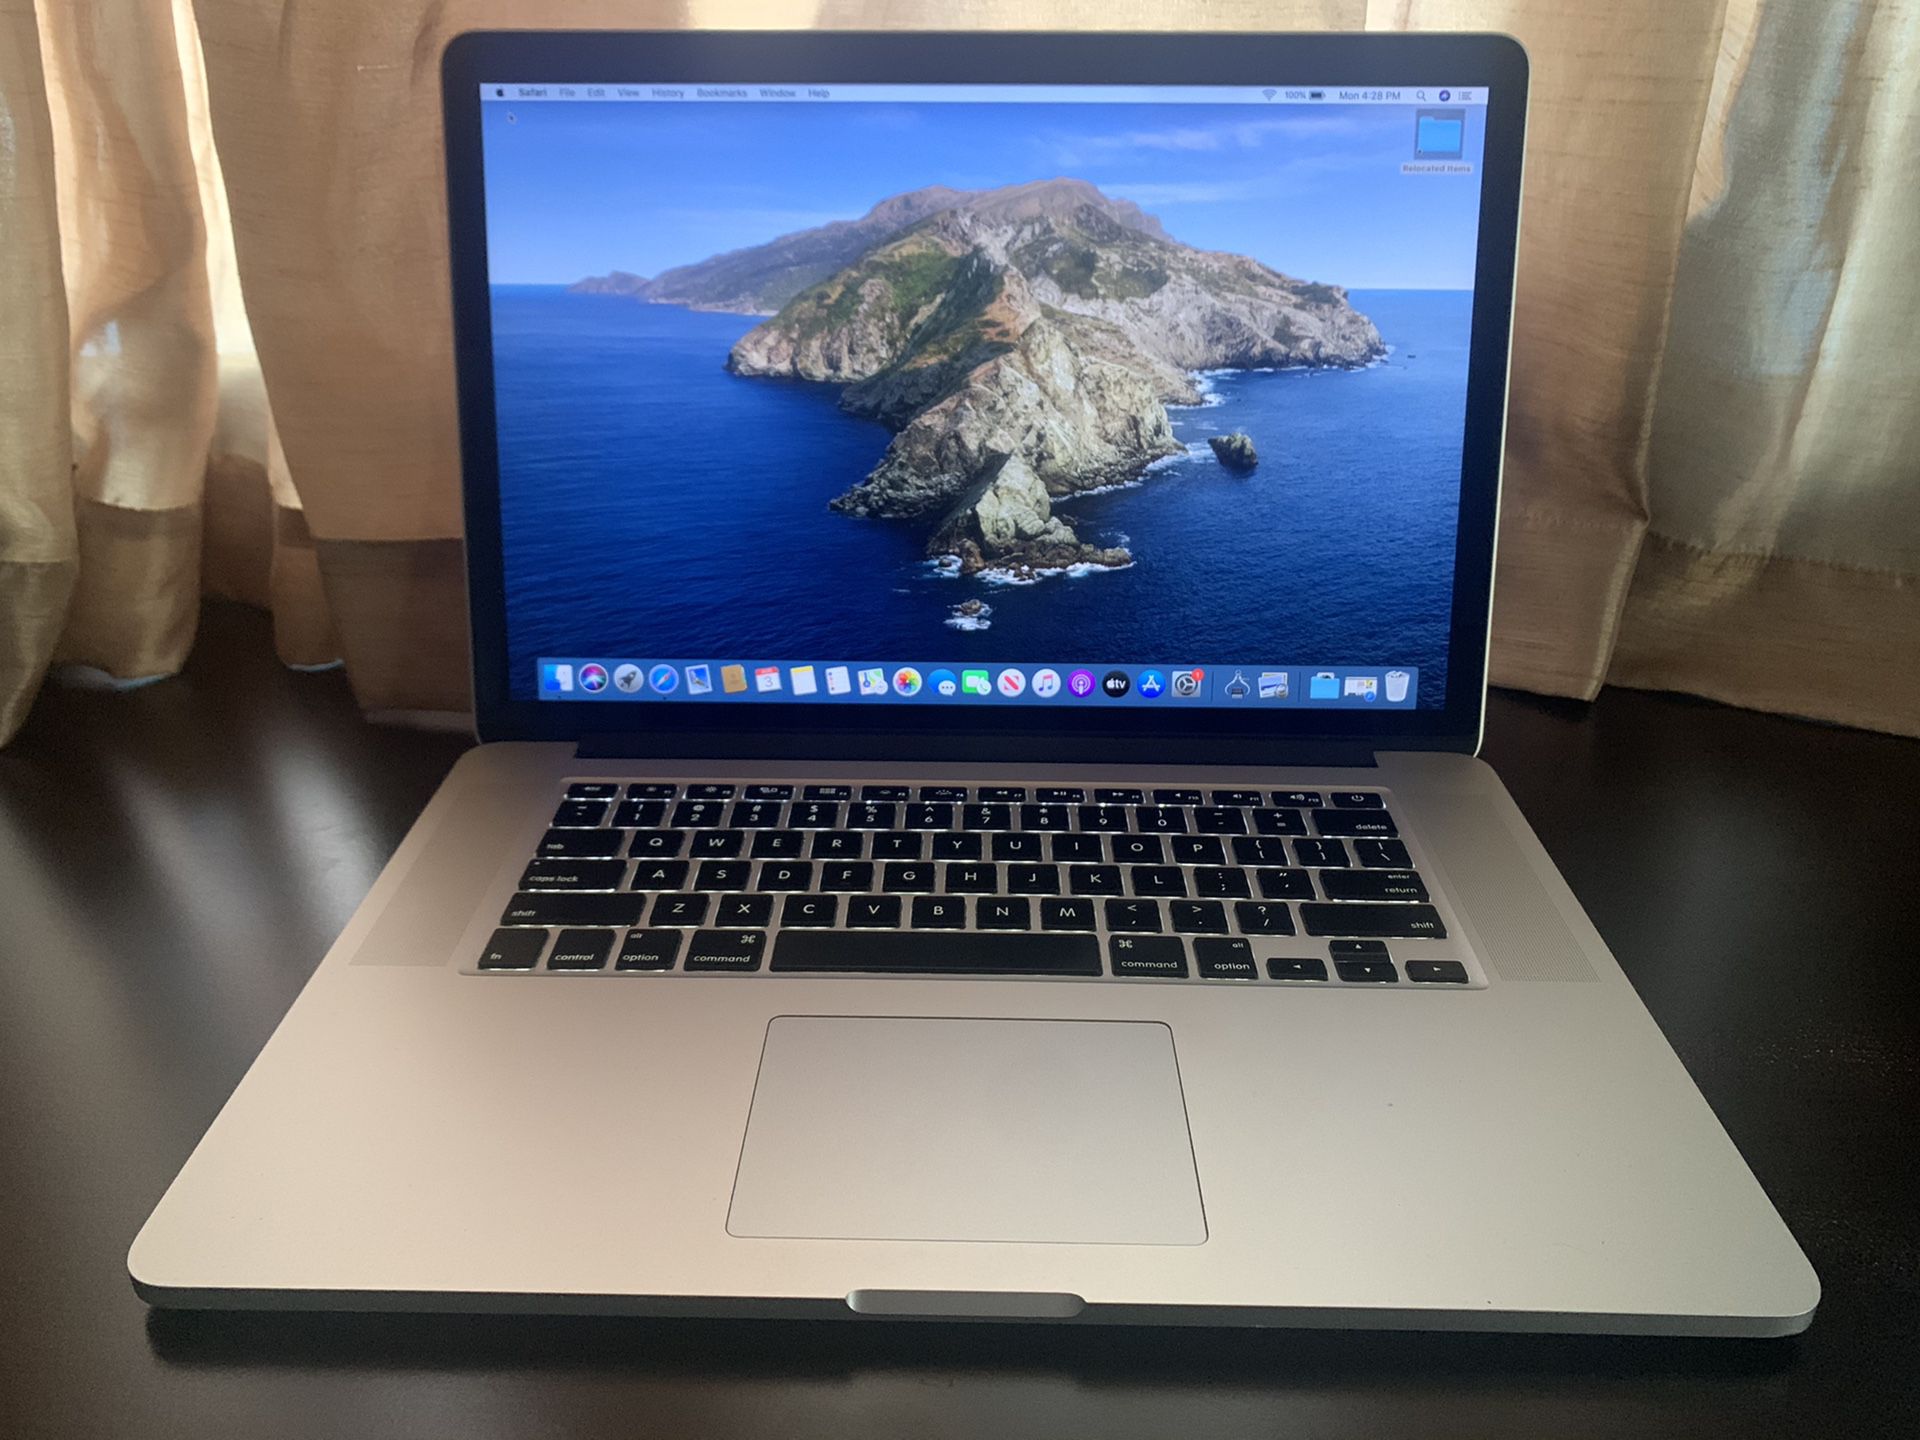 MacBook Pro 15 (Retina display) 2013.